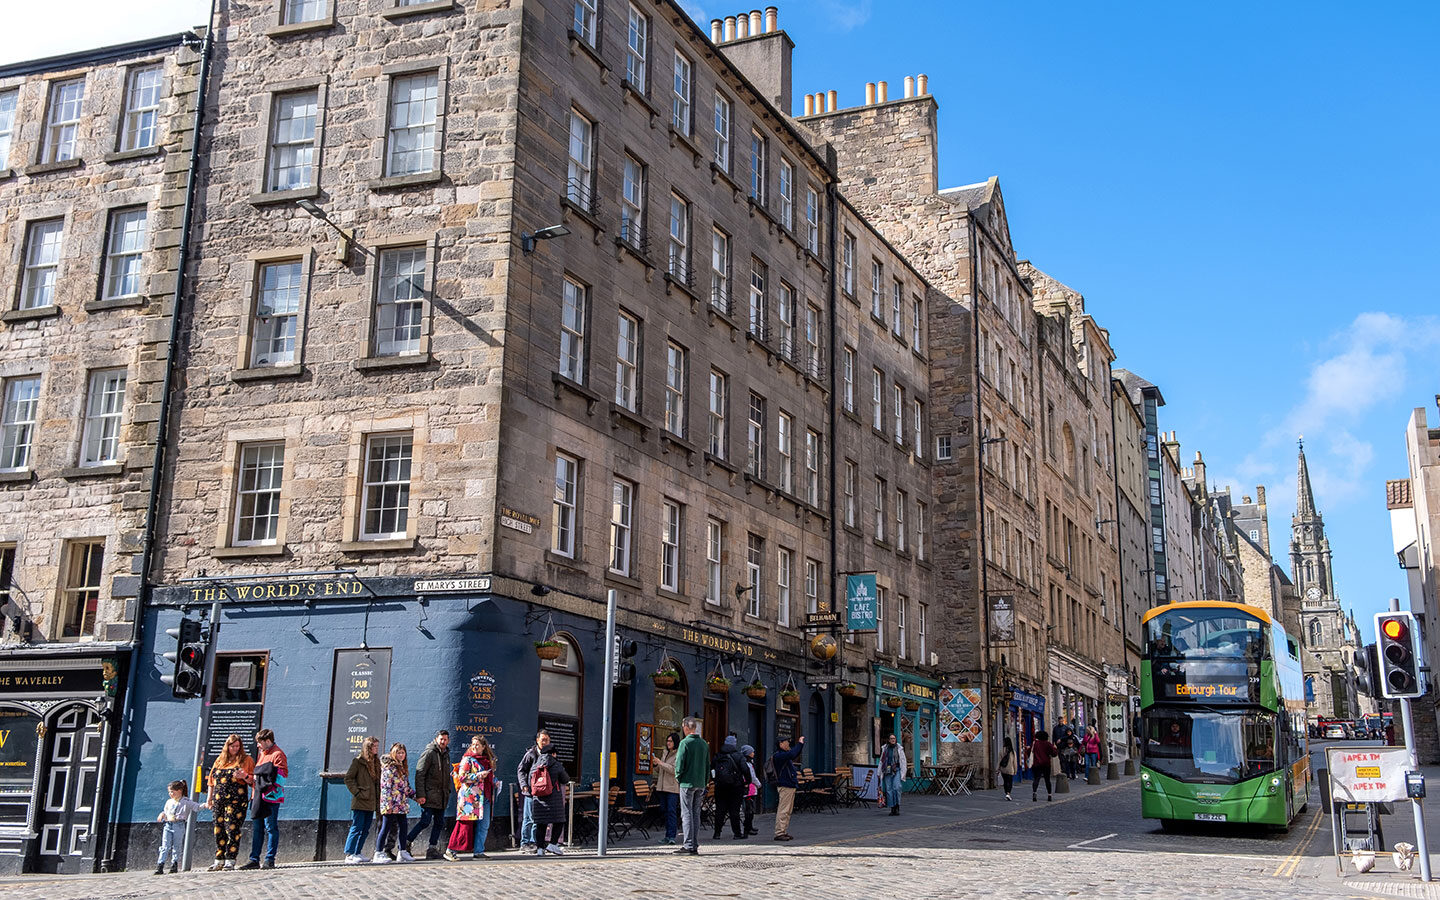 Edinburgh on a budget – The Royal Mile